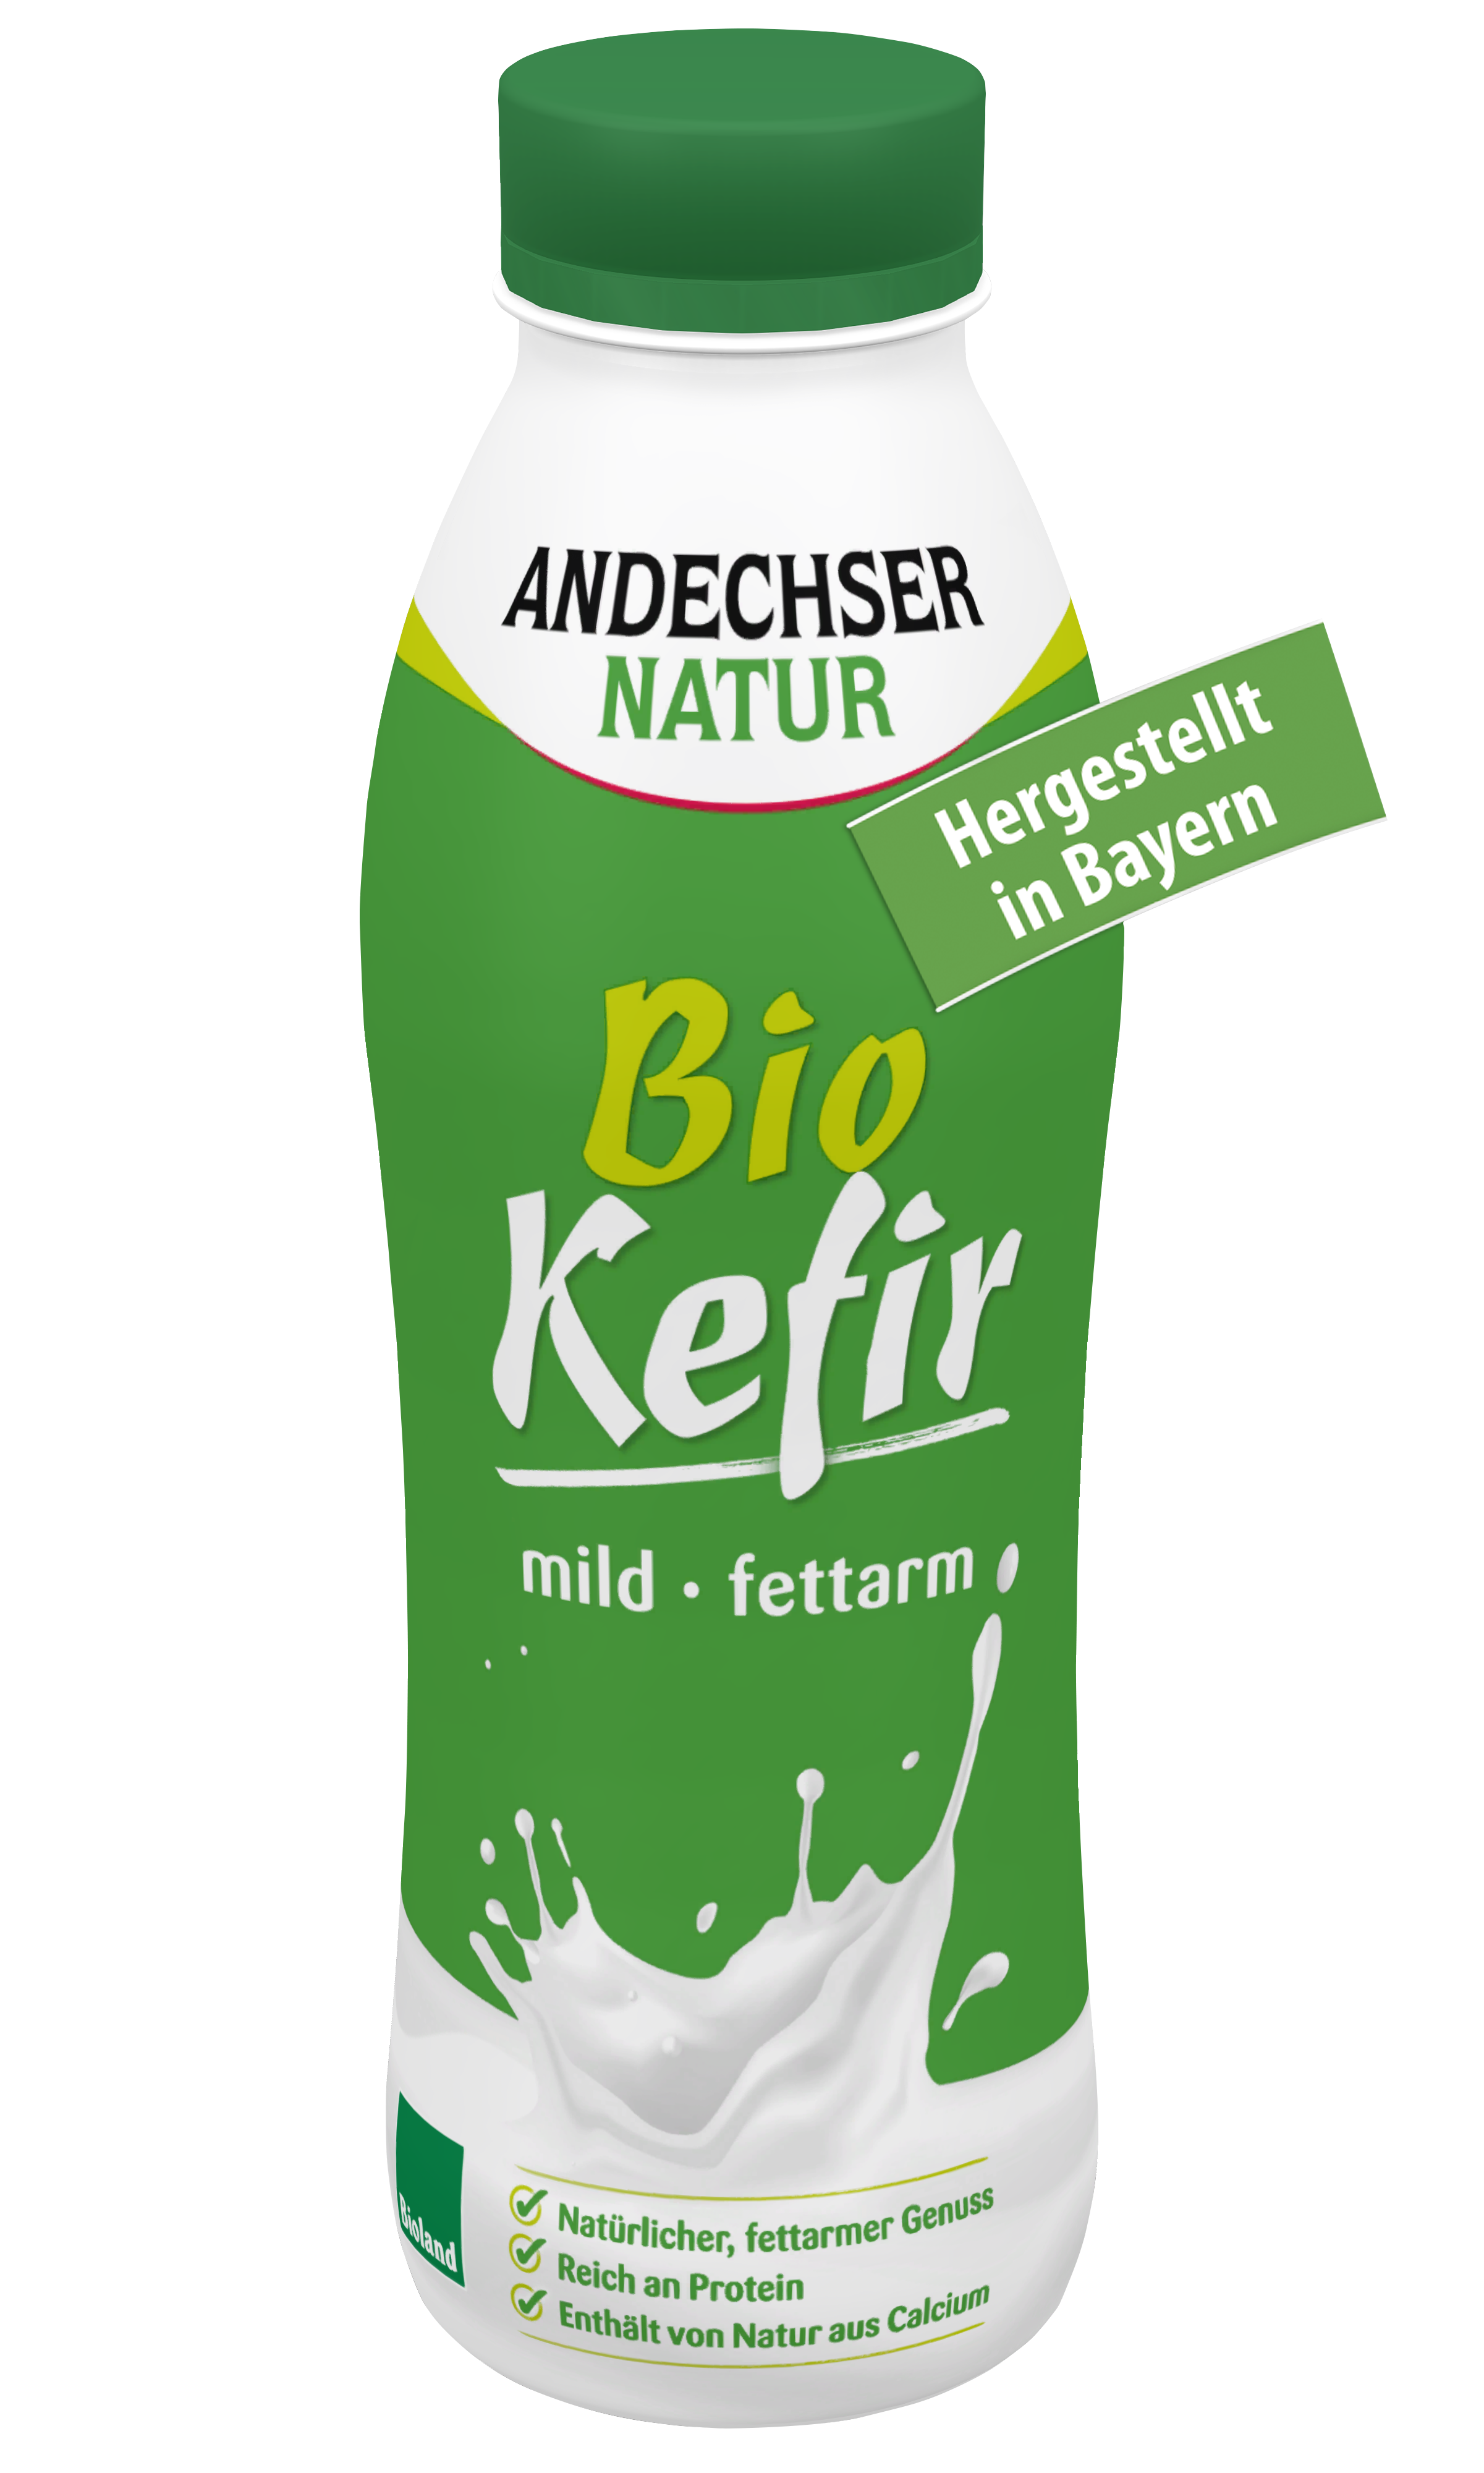 ANDECHSER NATUR fettarmer Bio-Kefir mild mit 1,5% Fett 500g